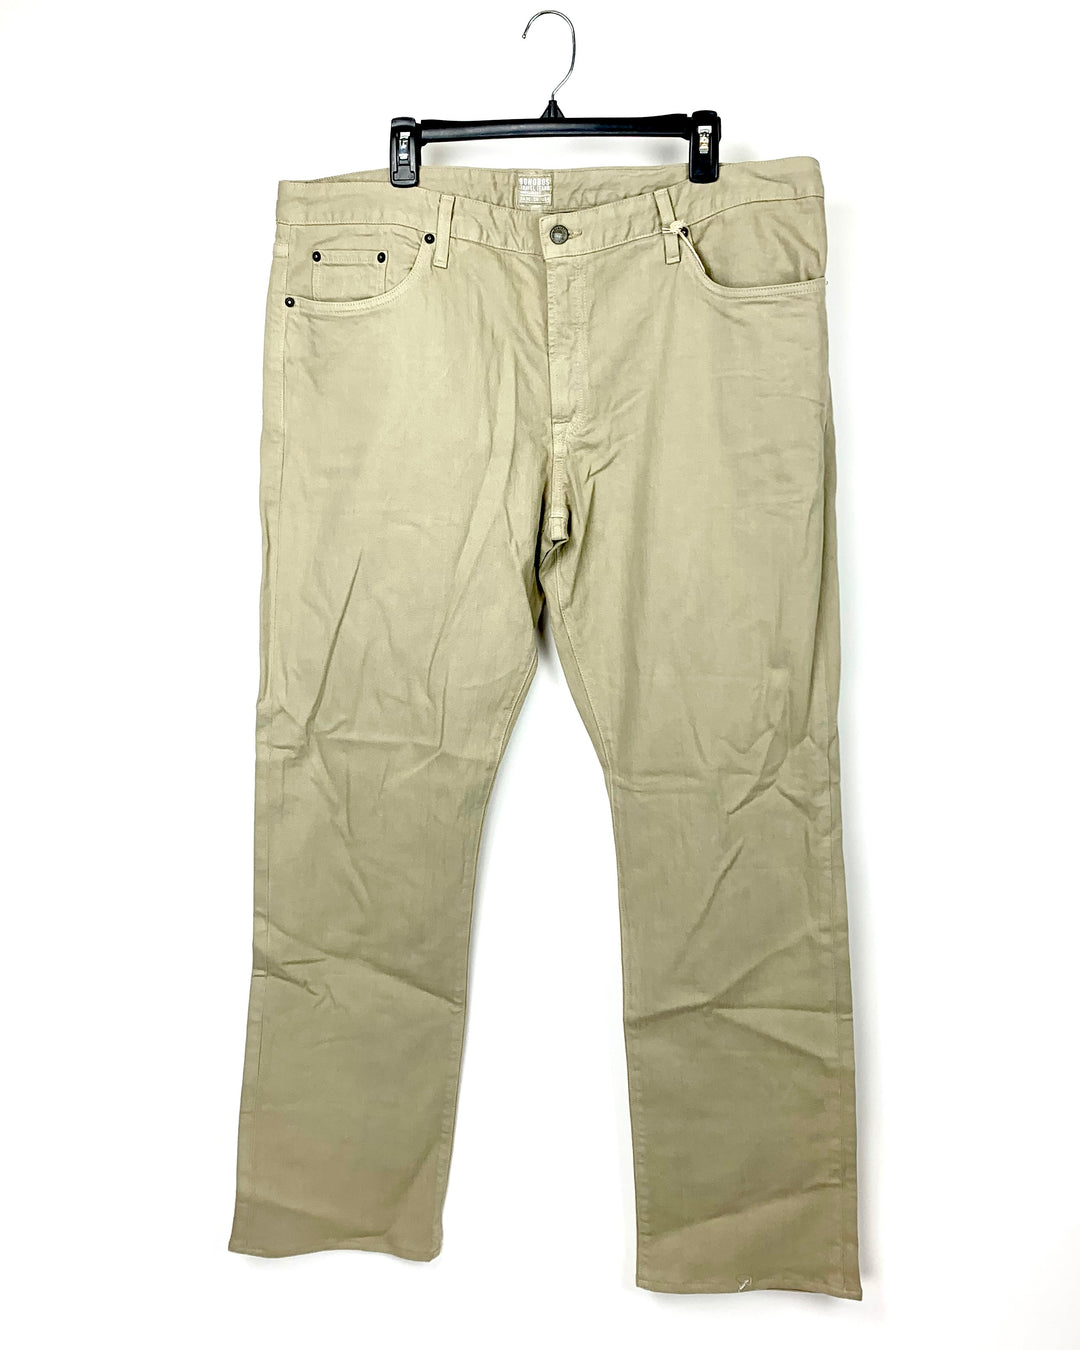 MENS Tan Denim Straight Fit Pants - Size 40/32